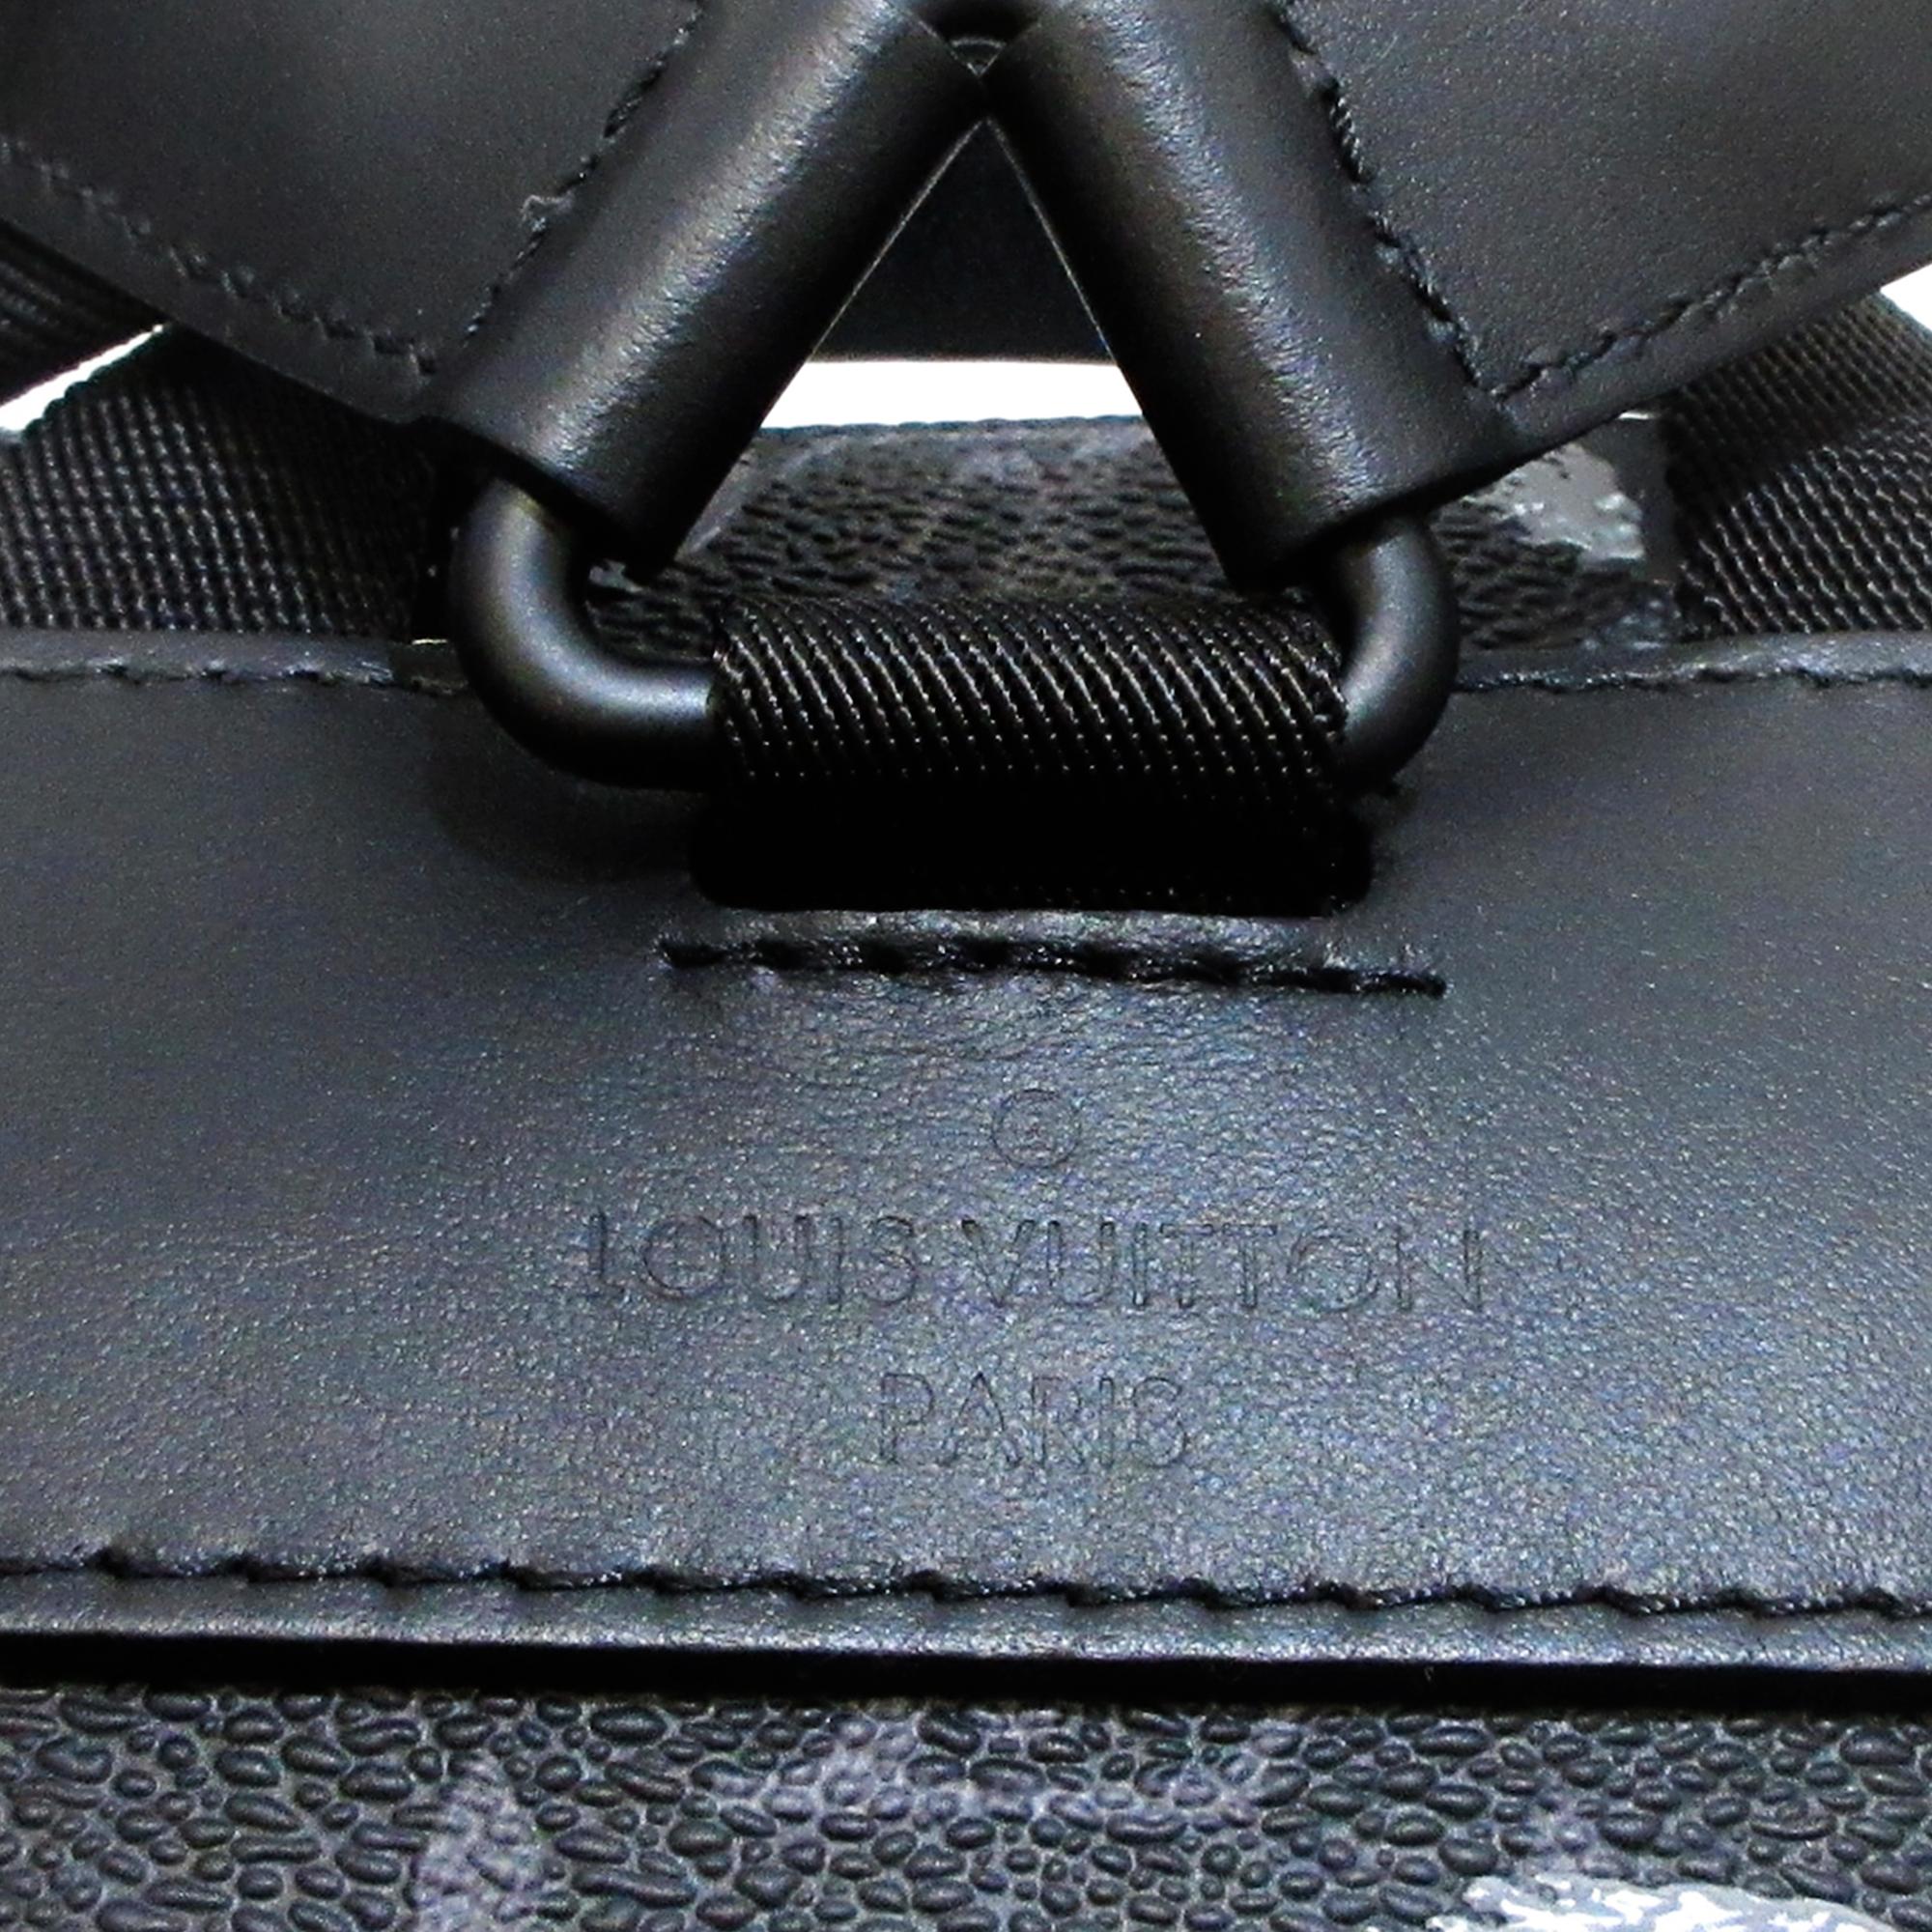 Louis Vuitton Black X Yayoi Kusama Monogram Eclipse Christopher MM